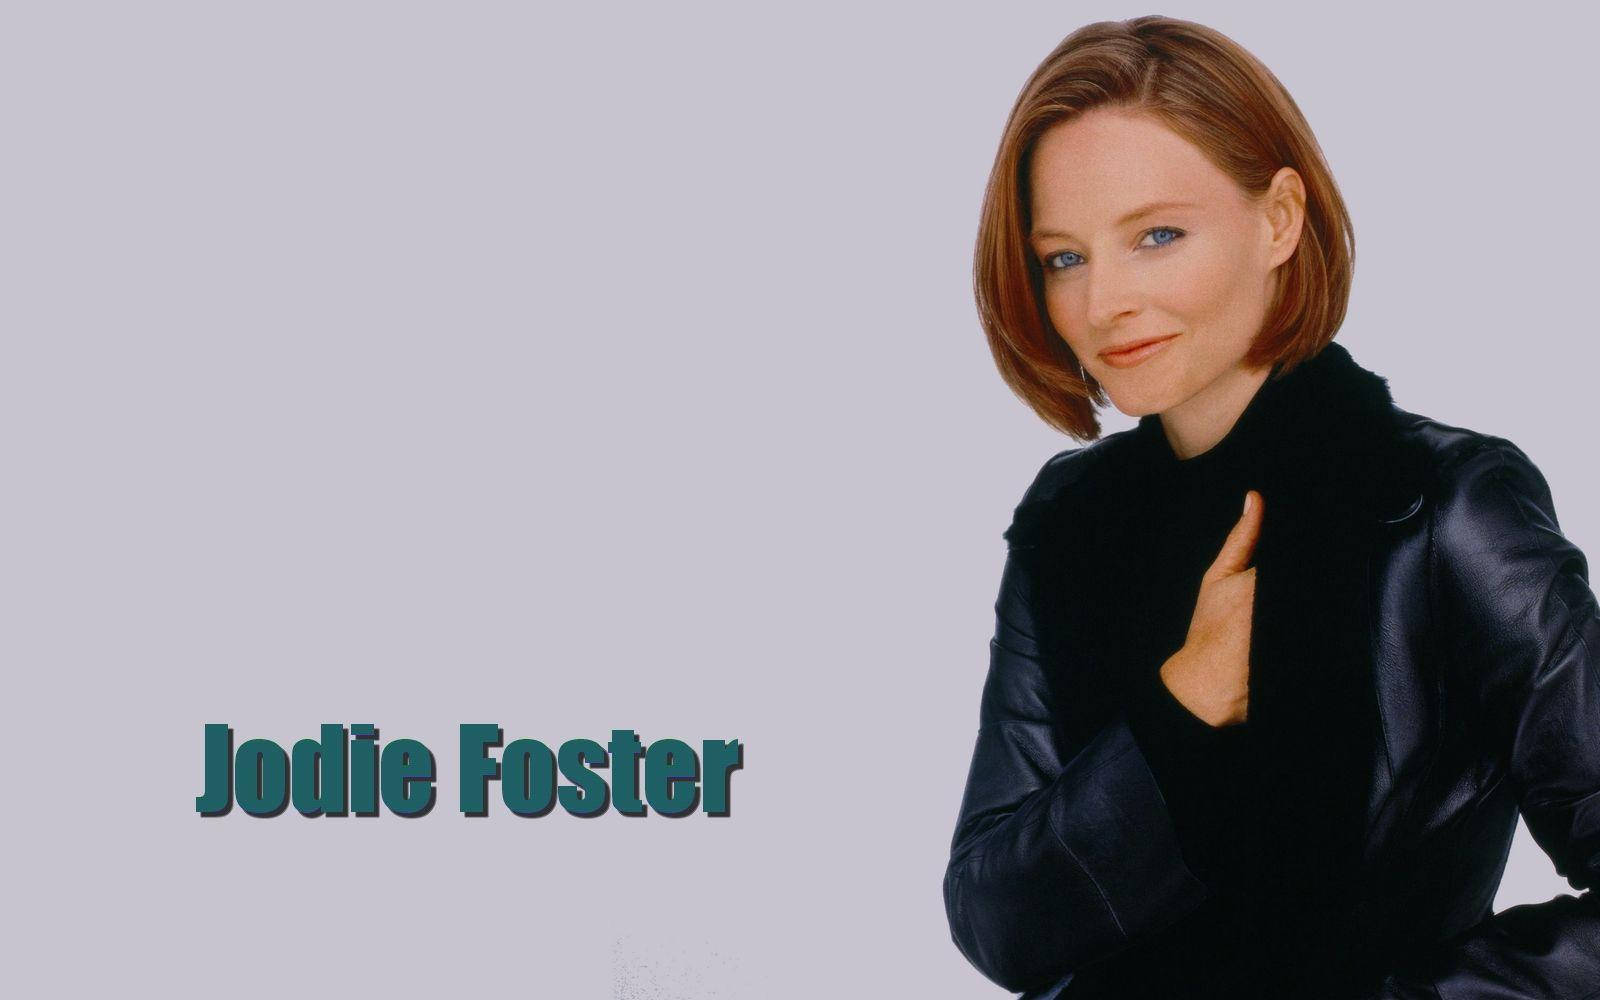 Jodie Foster In Black Jacket Wallpaper